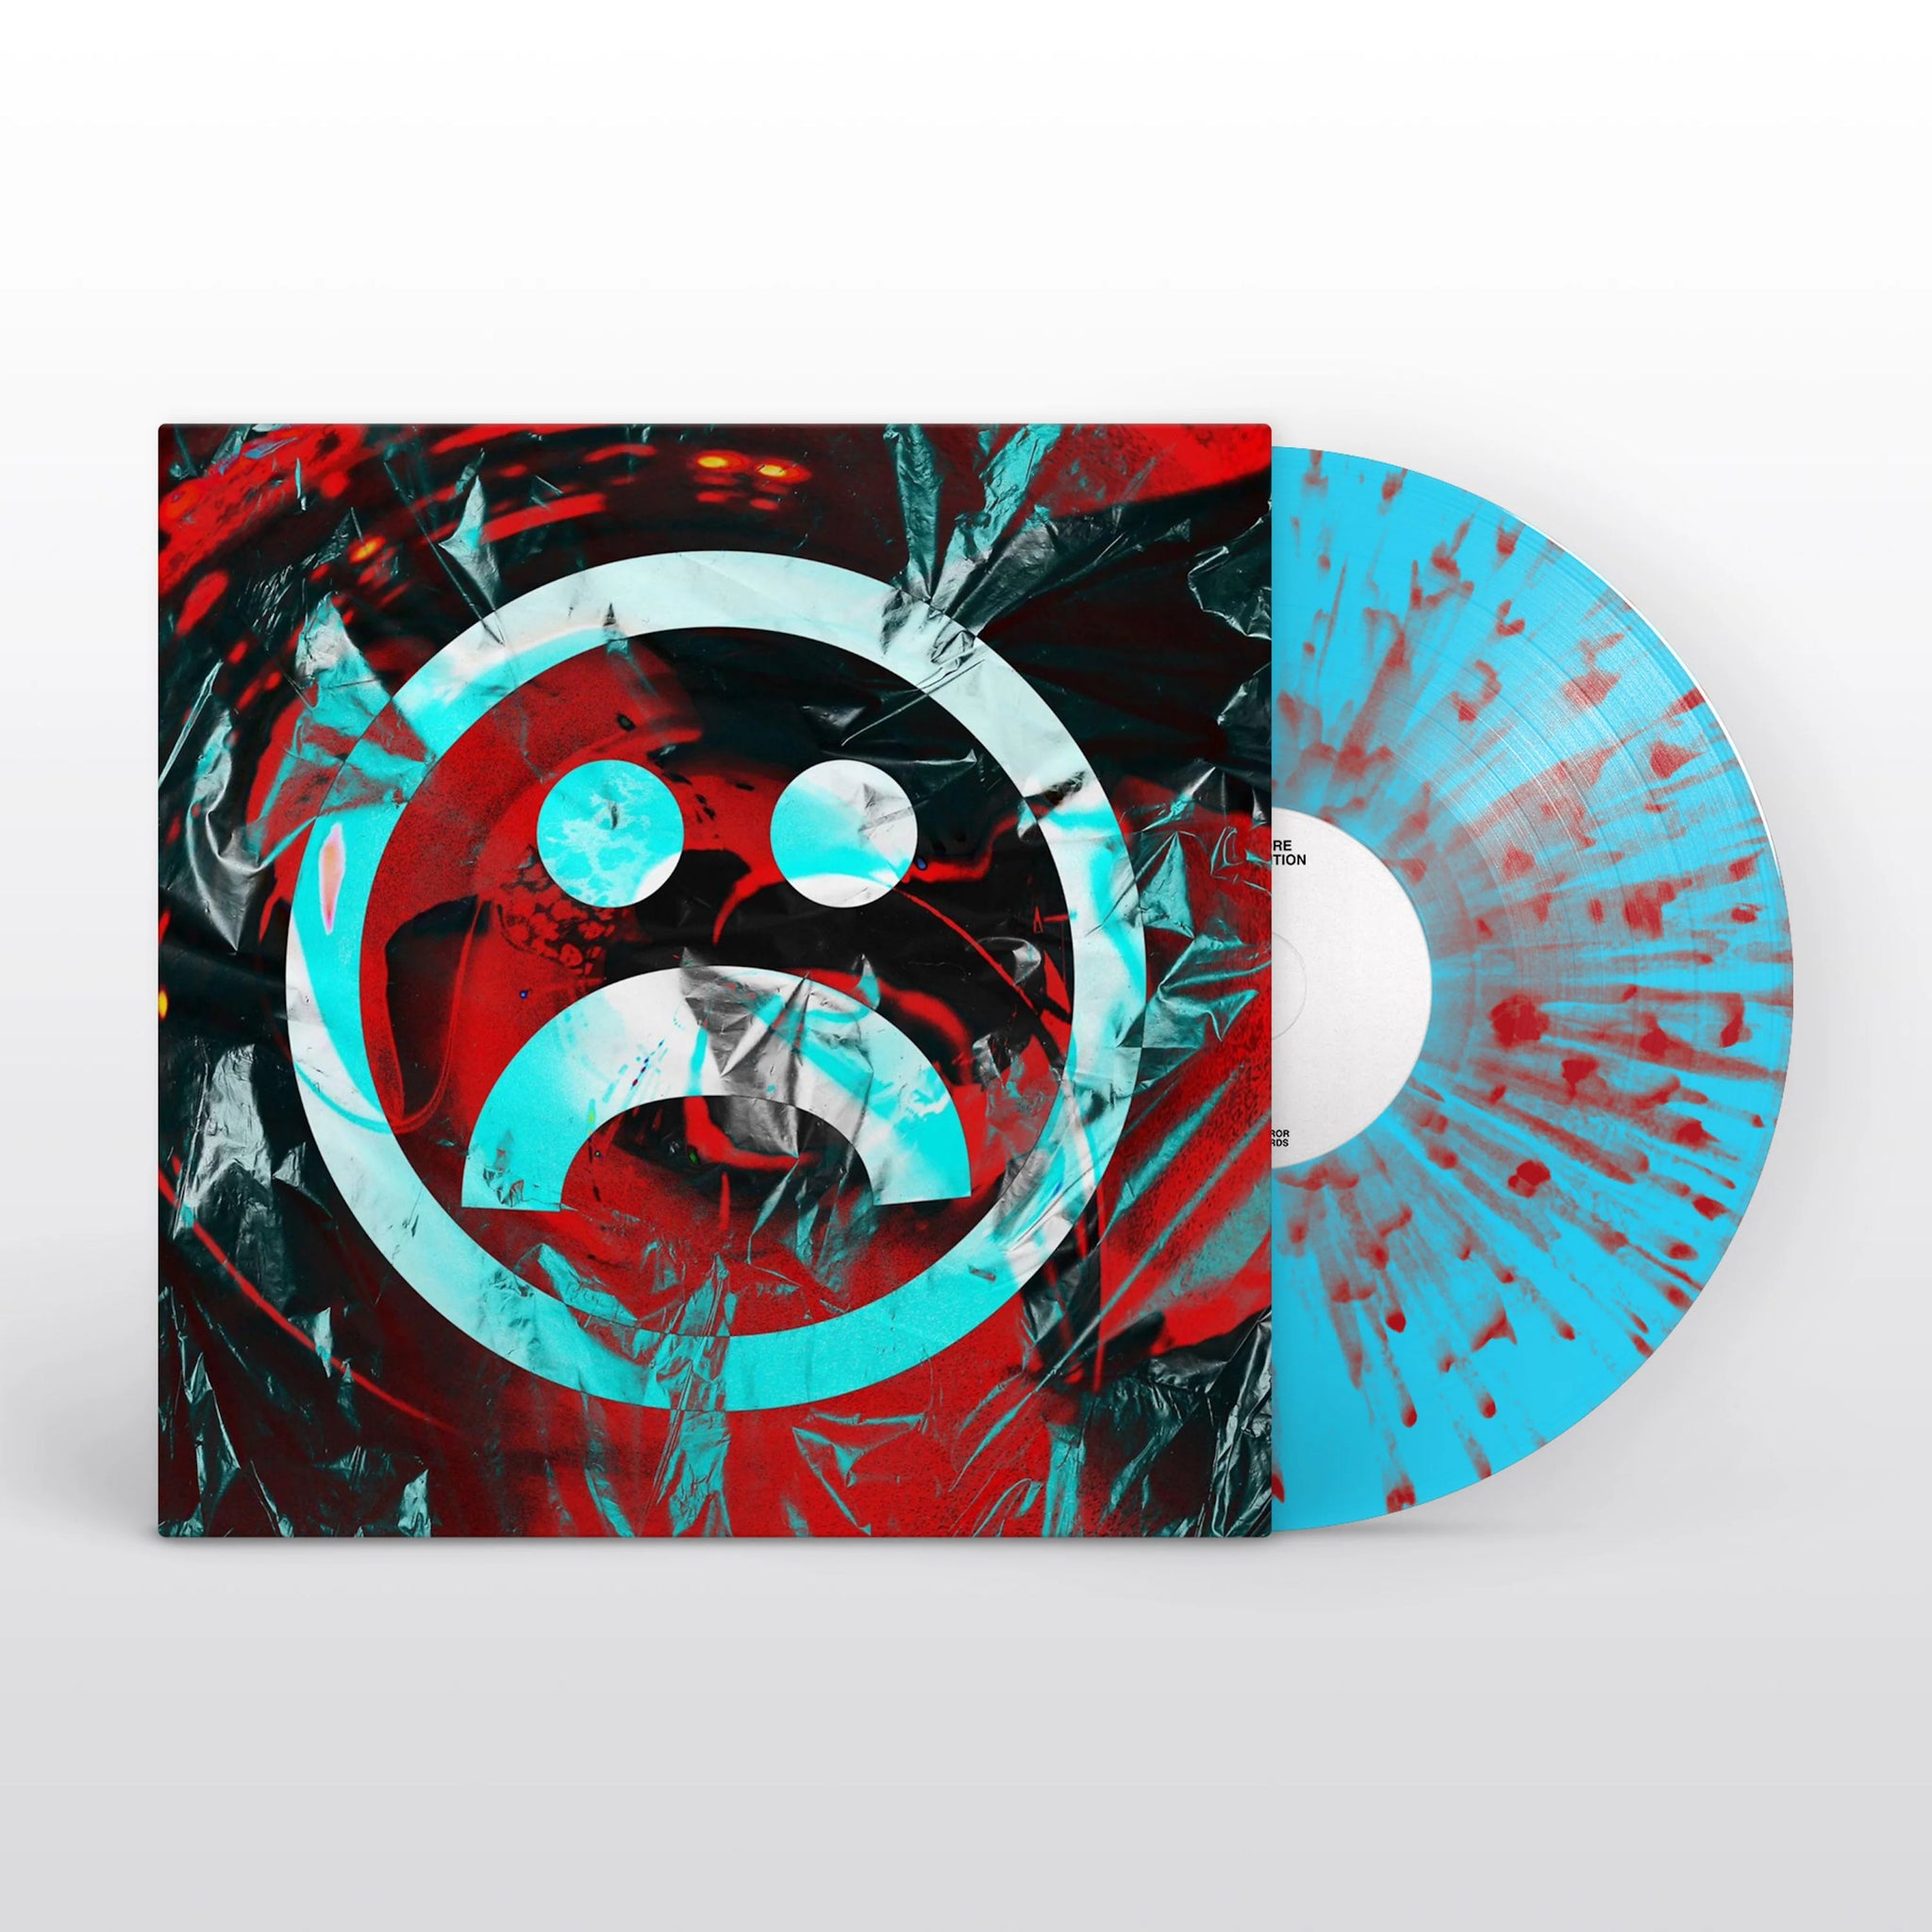 TOKKY HORROR - Kappacore: Xtended Edition - LP - Electric Blue & Red Splatter Vinyl [OCT 6]